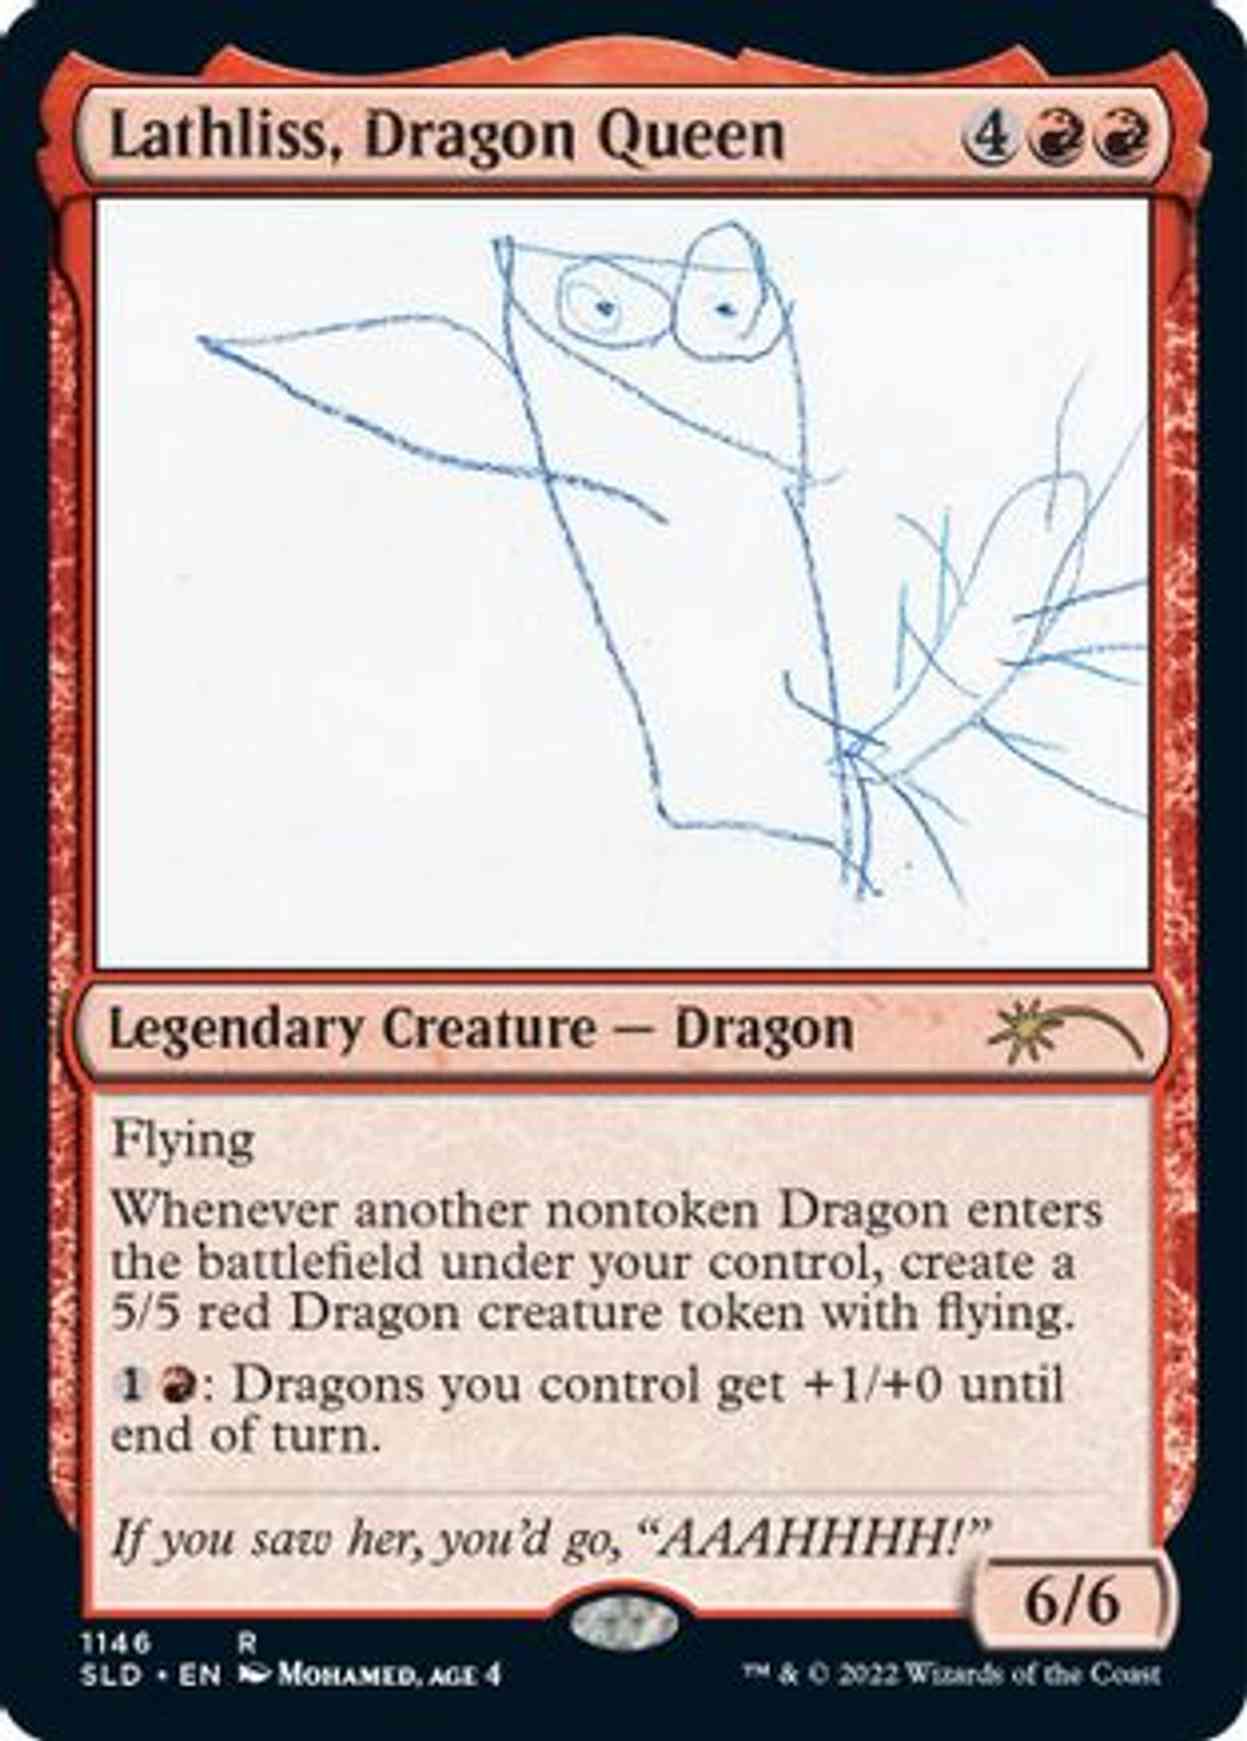 Lathliss, Dragon Queen (1146) magic card front